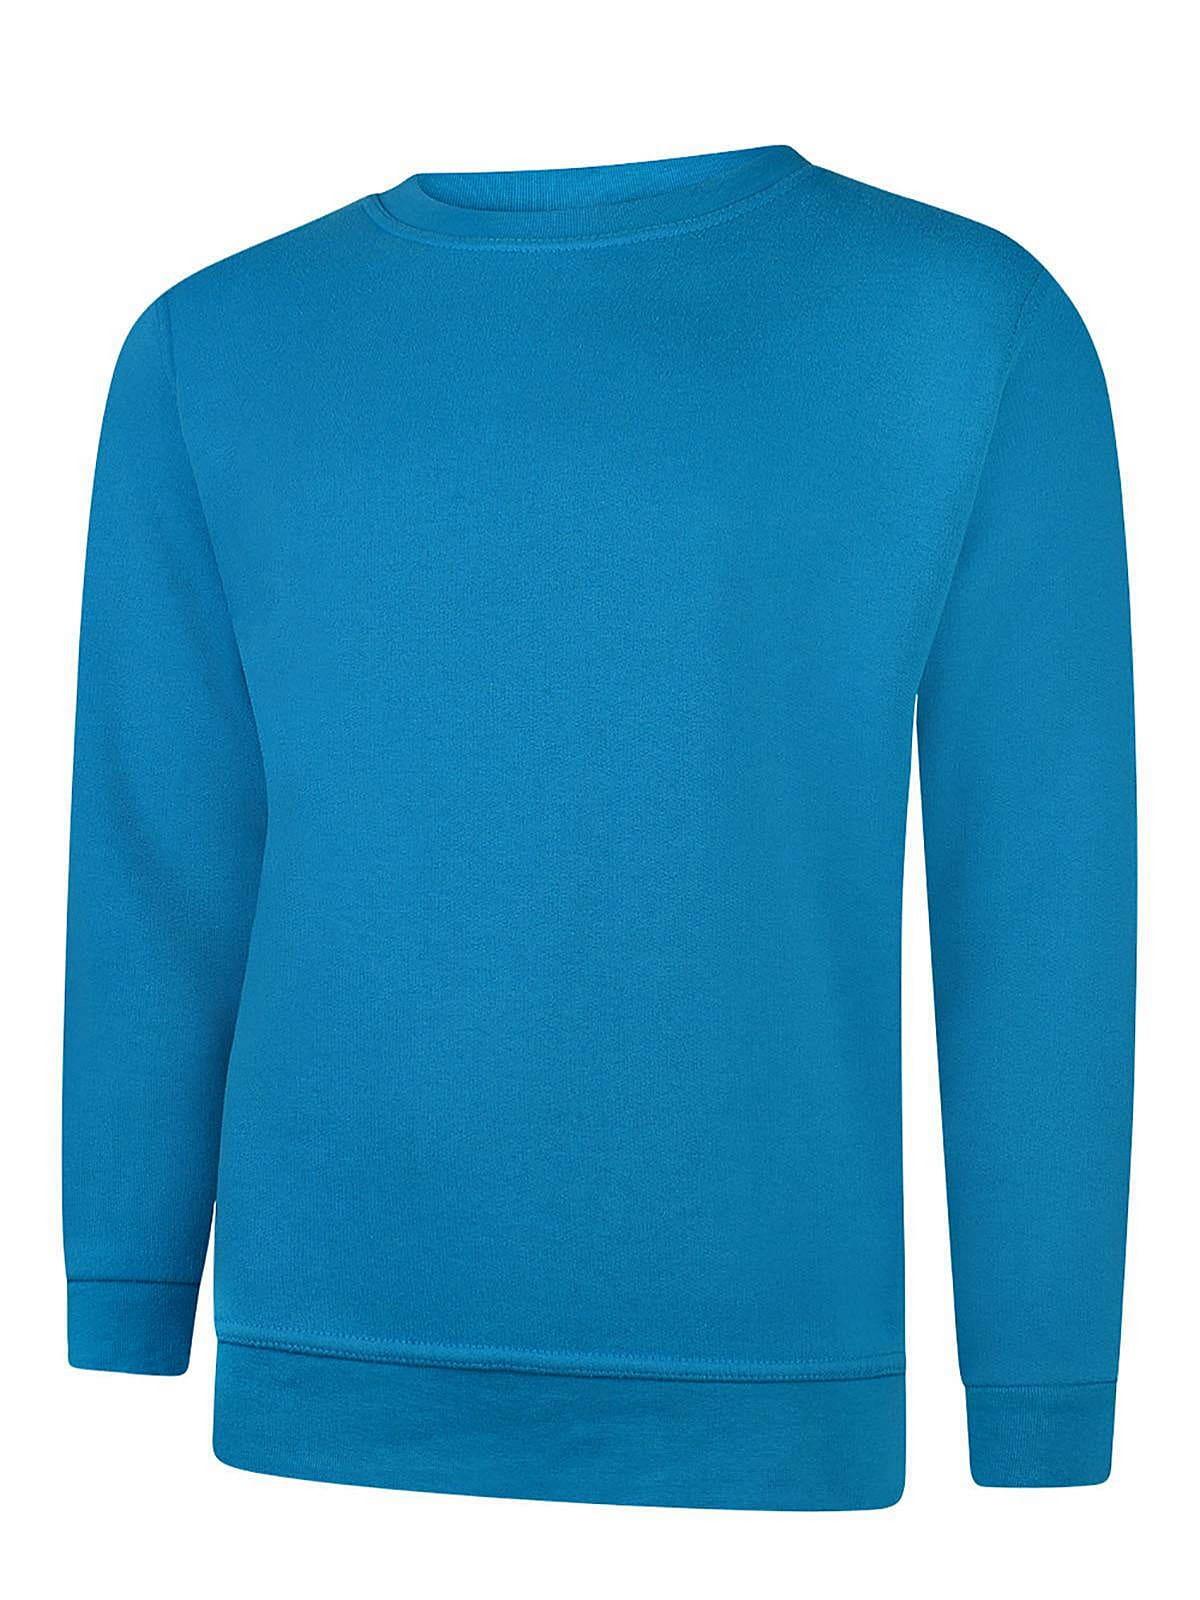 Uneek 300GSM Classic Sweatshirt in Sapphire Blue (Product Code: UC203)